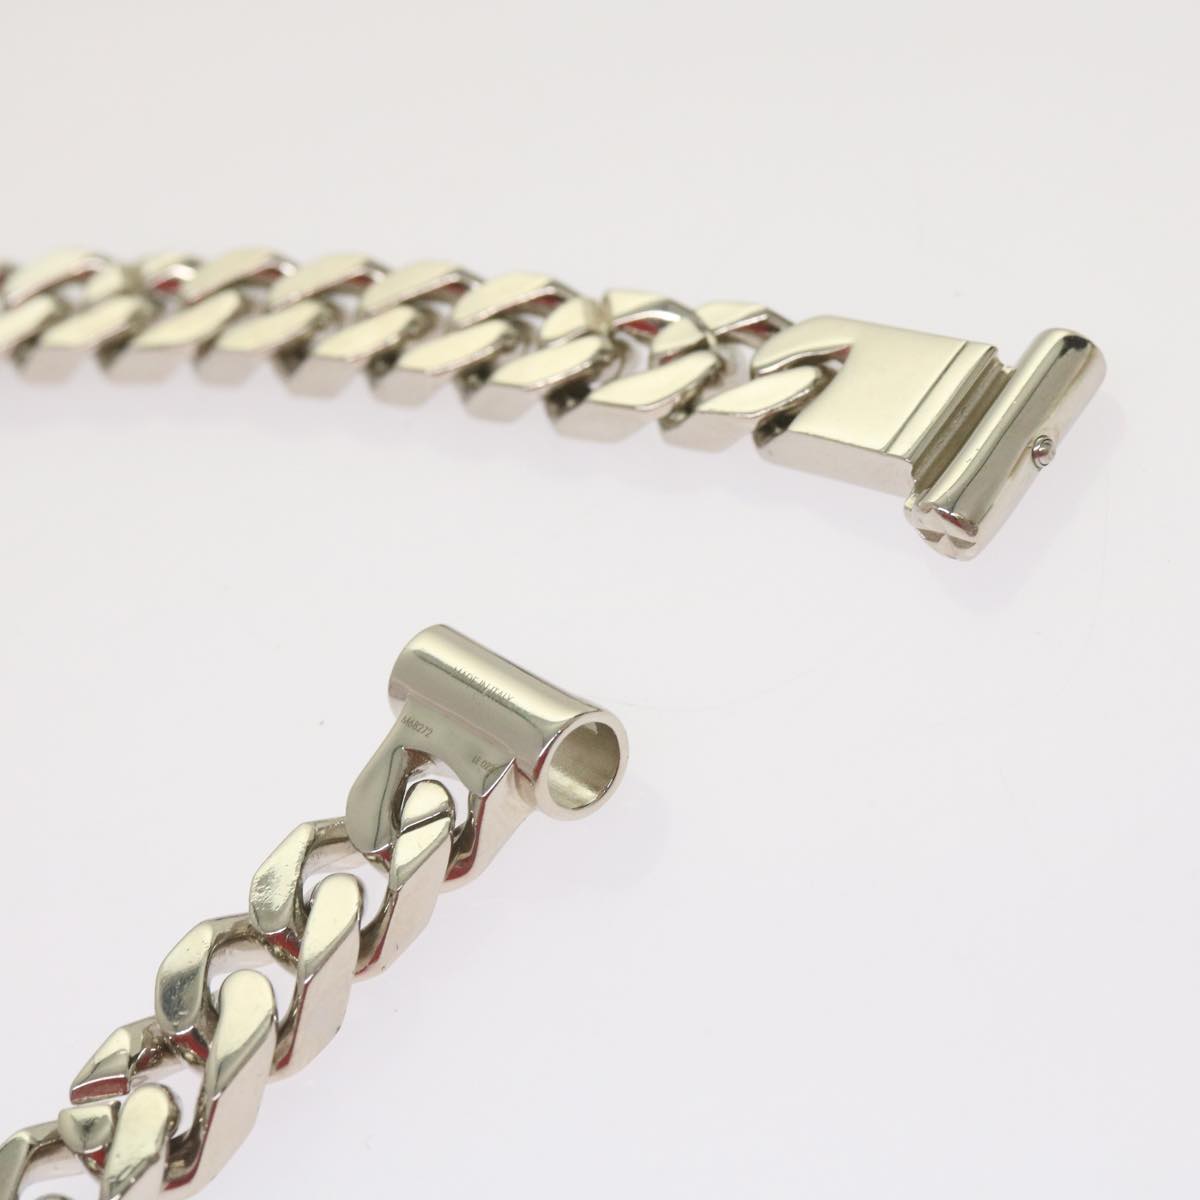 LOUIS VUITTON Collier Metal LV Chain Links Necklace Silver M68272 LV Auth 67569A